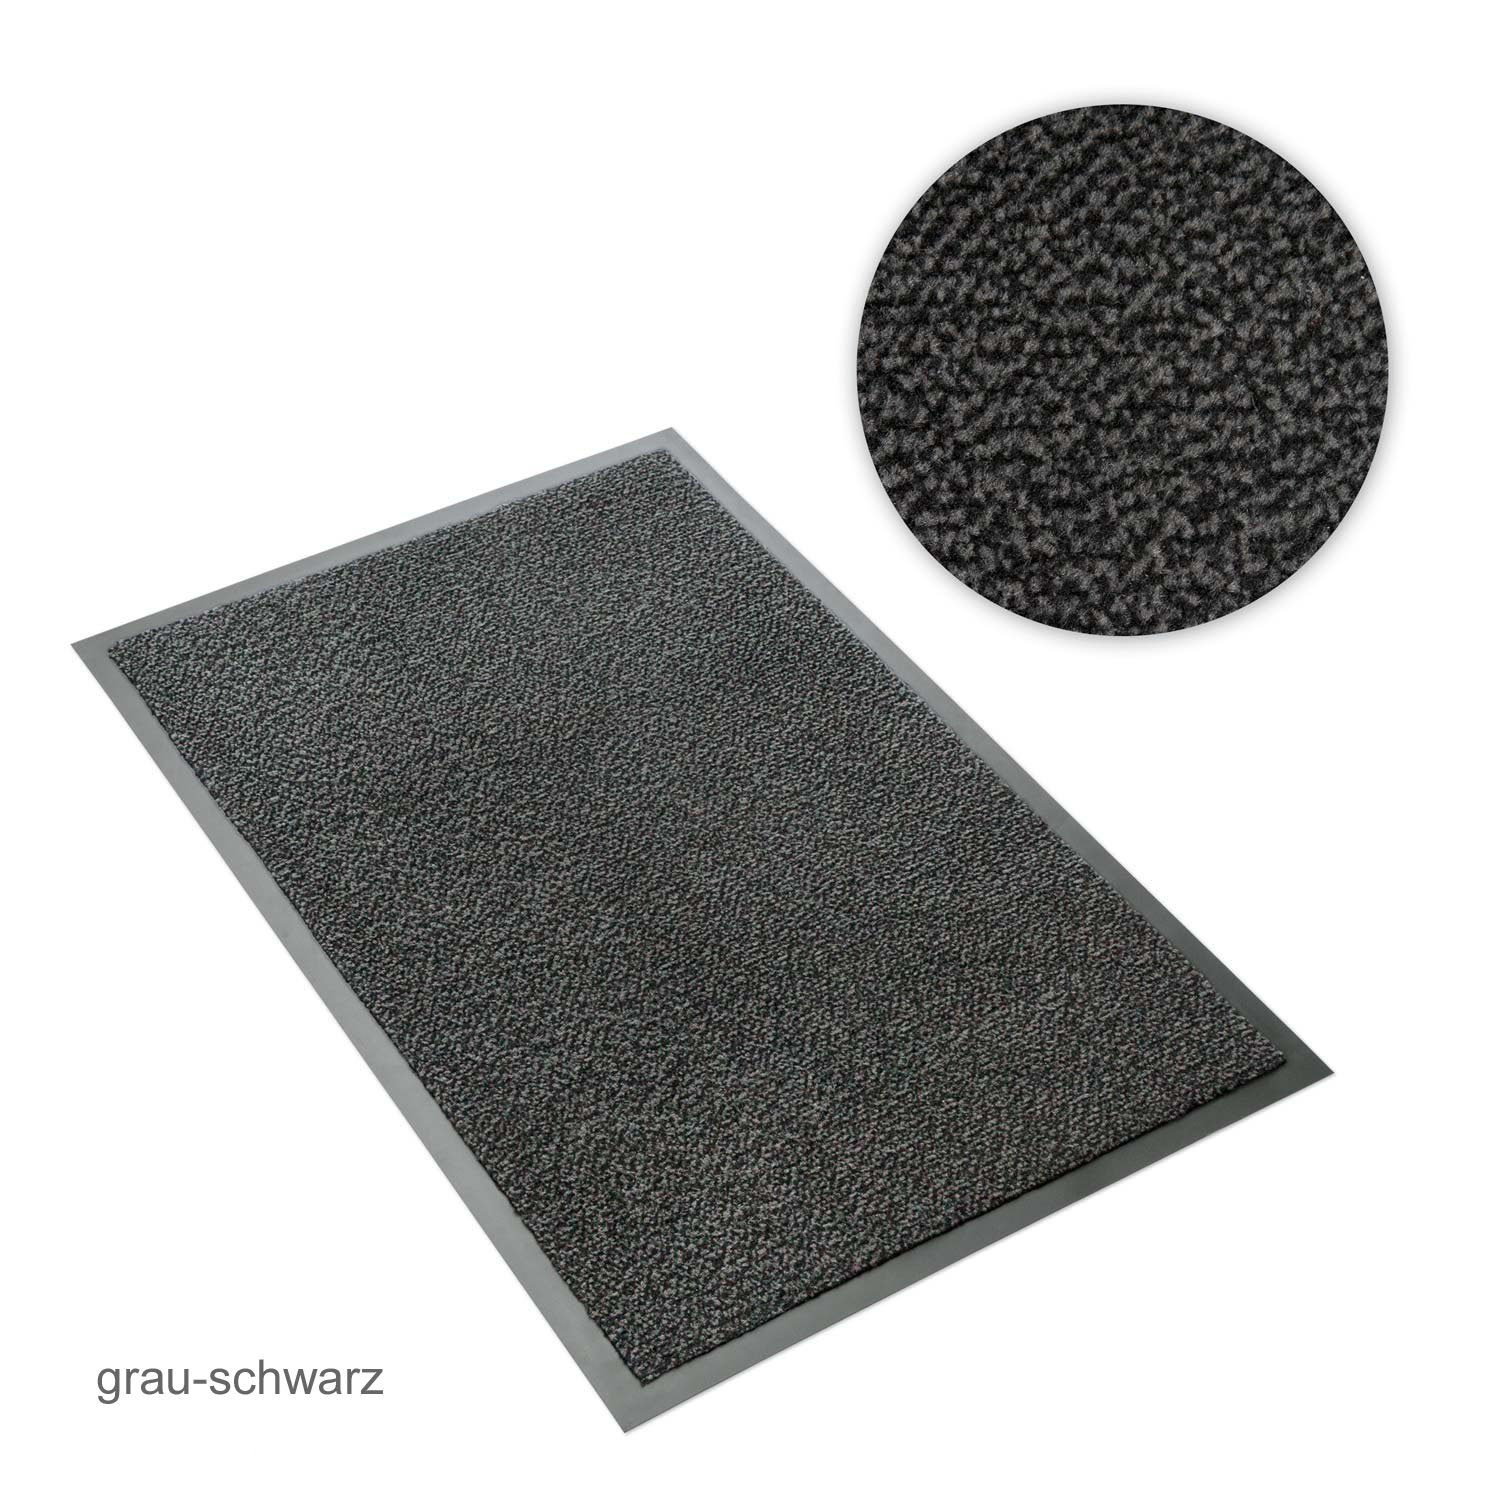 Fußmatte Sauberlaufmatte grau-schwarz meliert 60 x 90 cm, Metzker®, rechteckig, Höhe: 7 mm, 60x90cm - grau-schwarz meliert